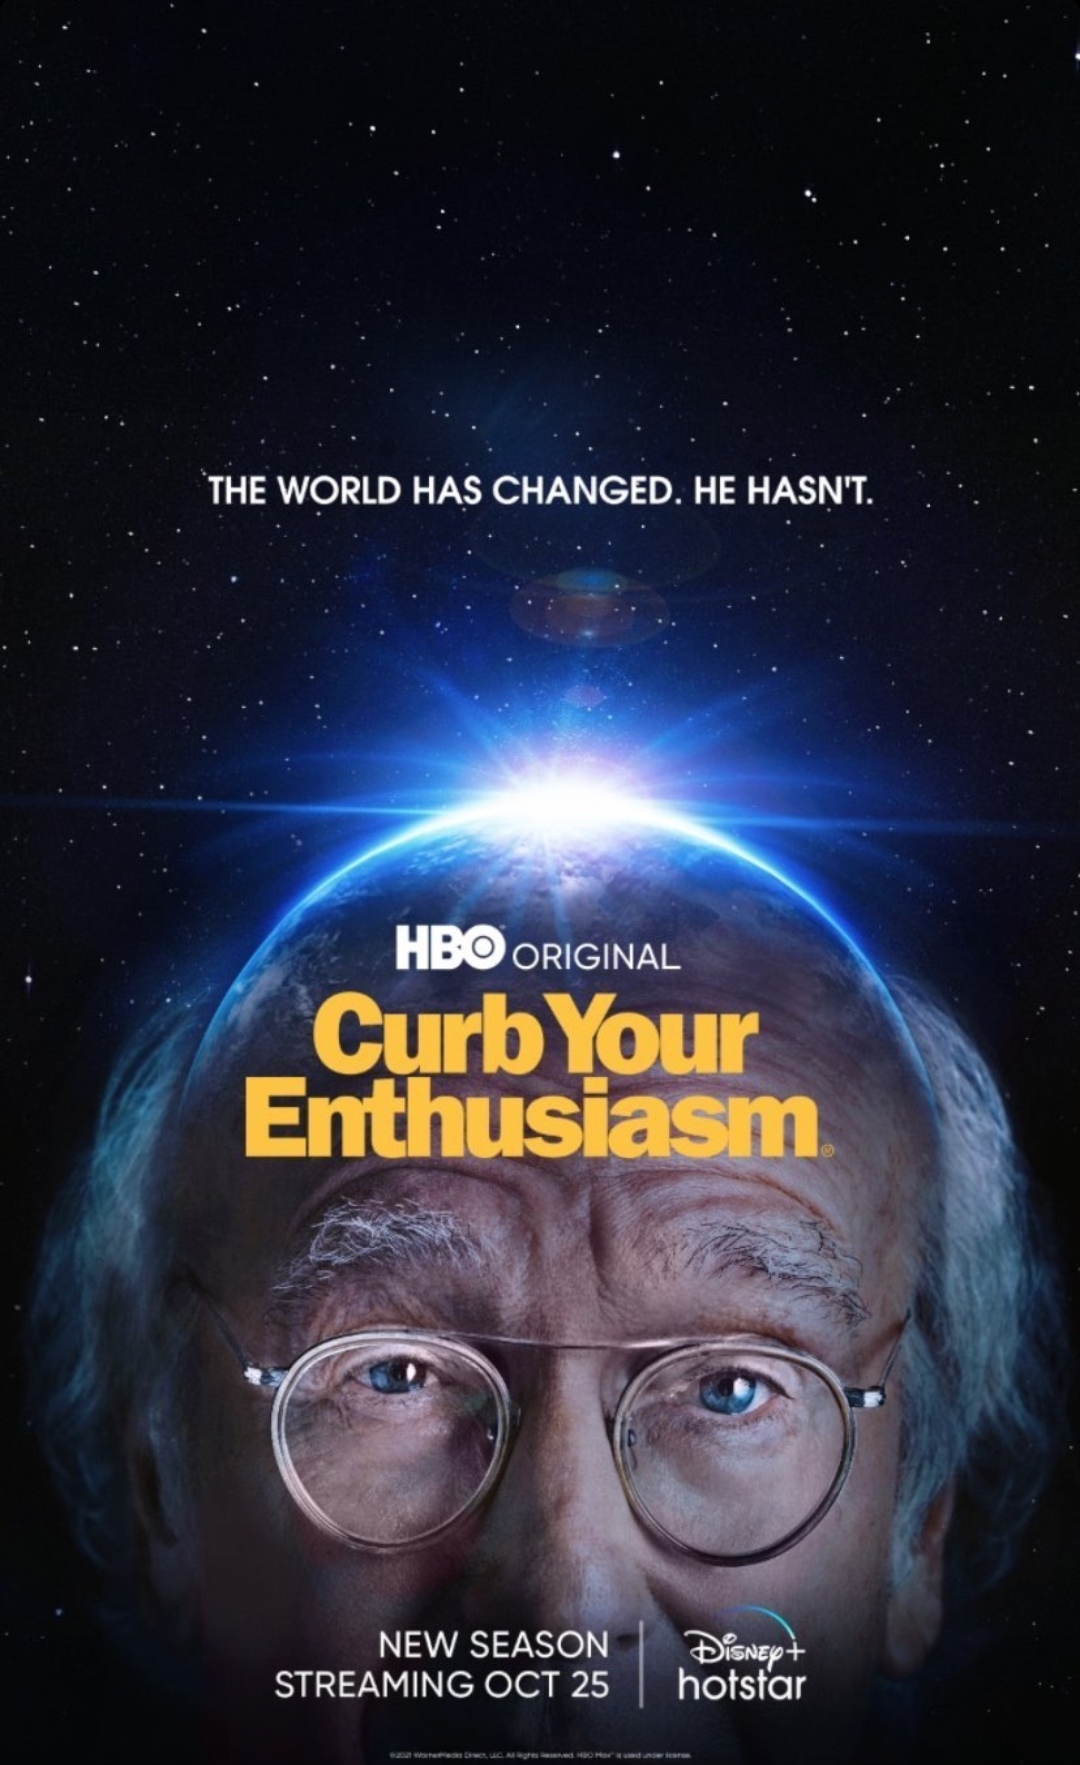 [TV] Curb Your Enthusiasm Season 11 (HBO)